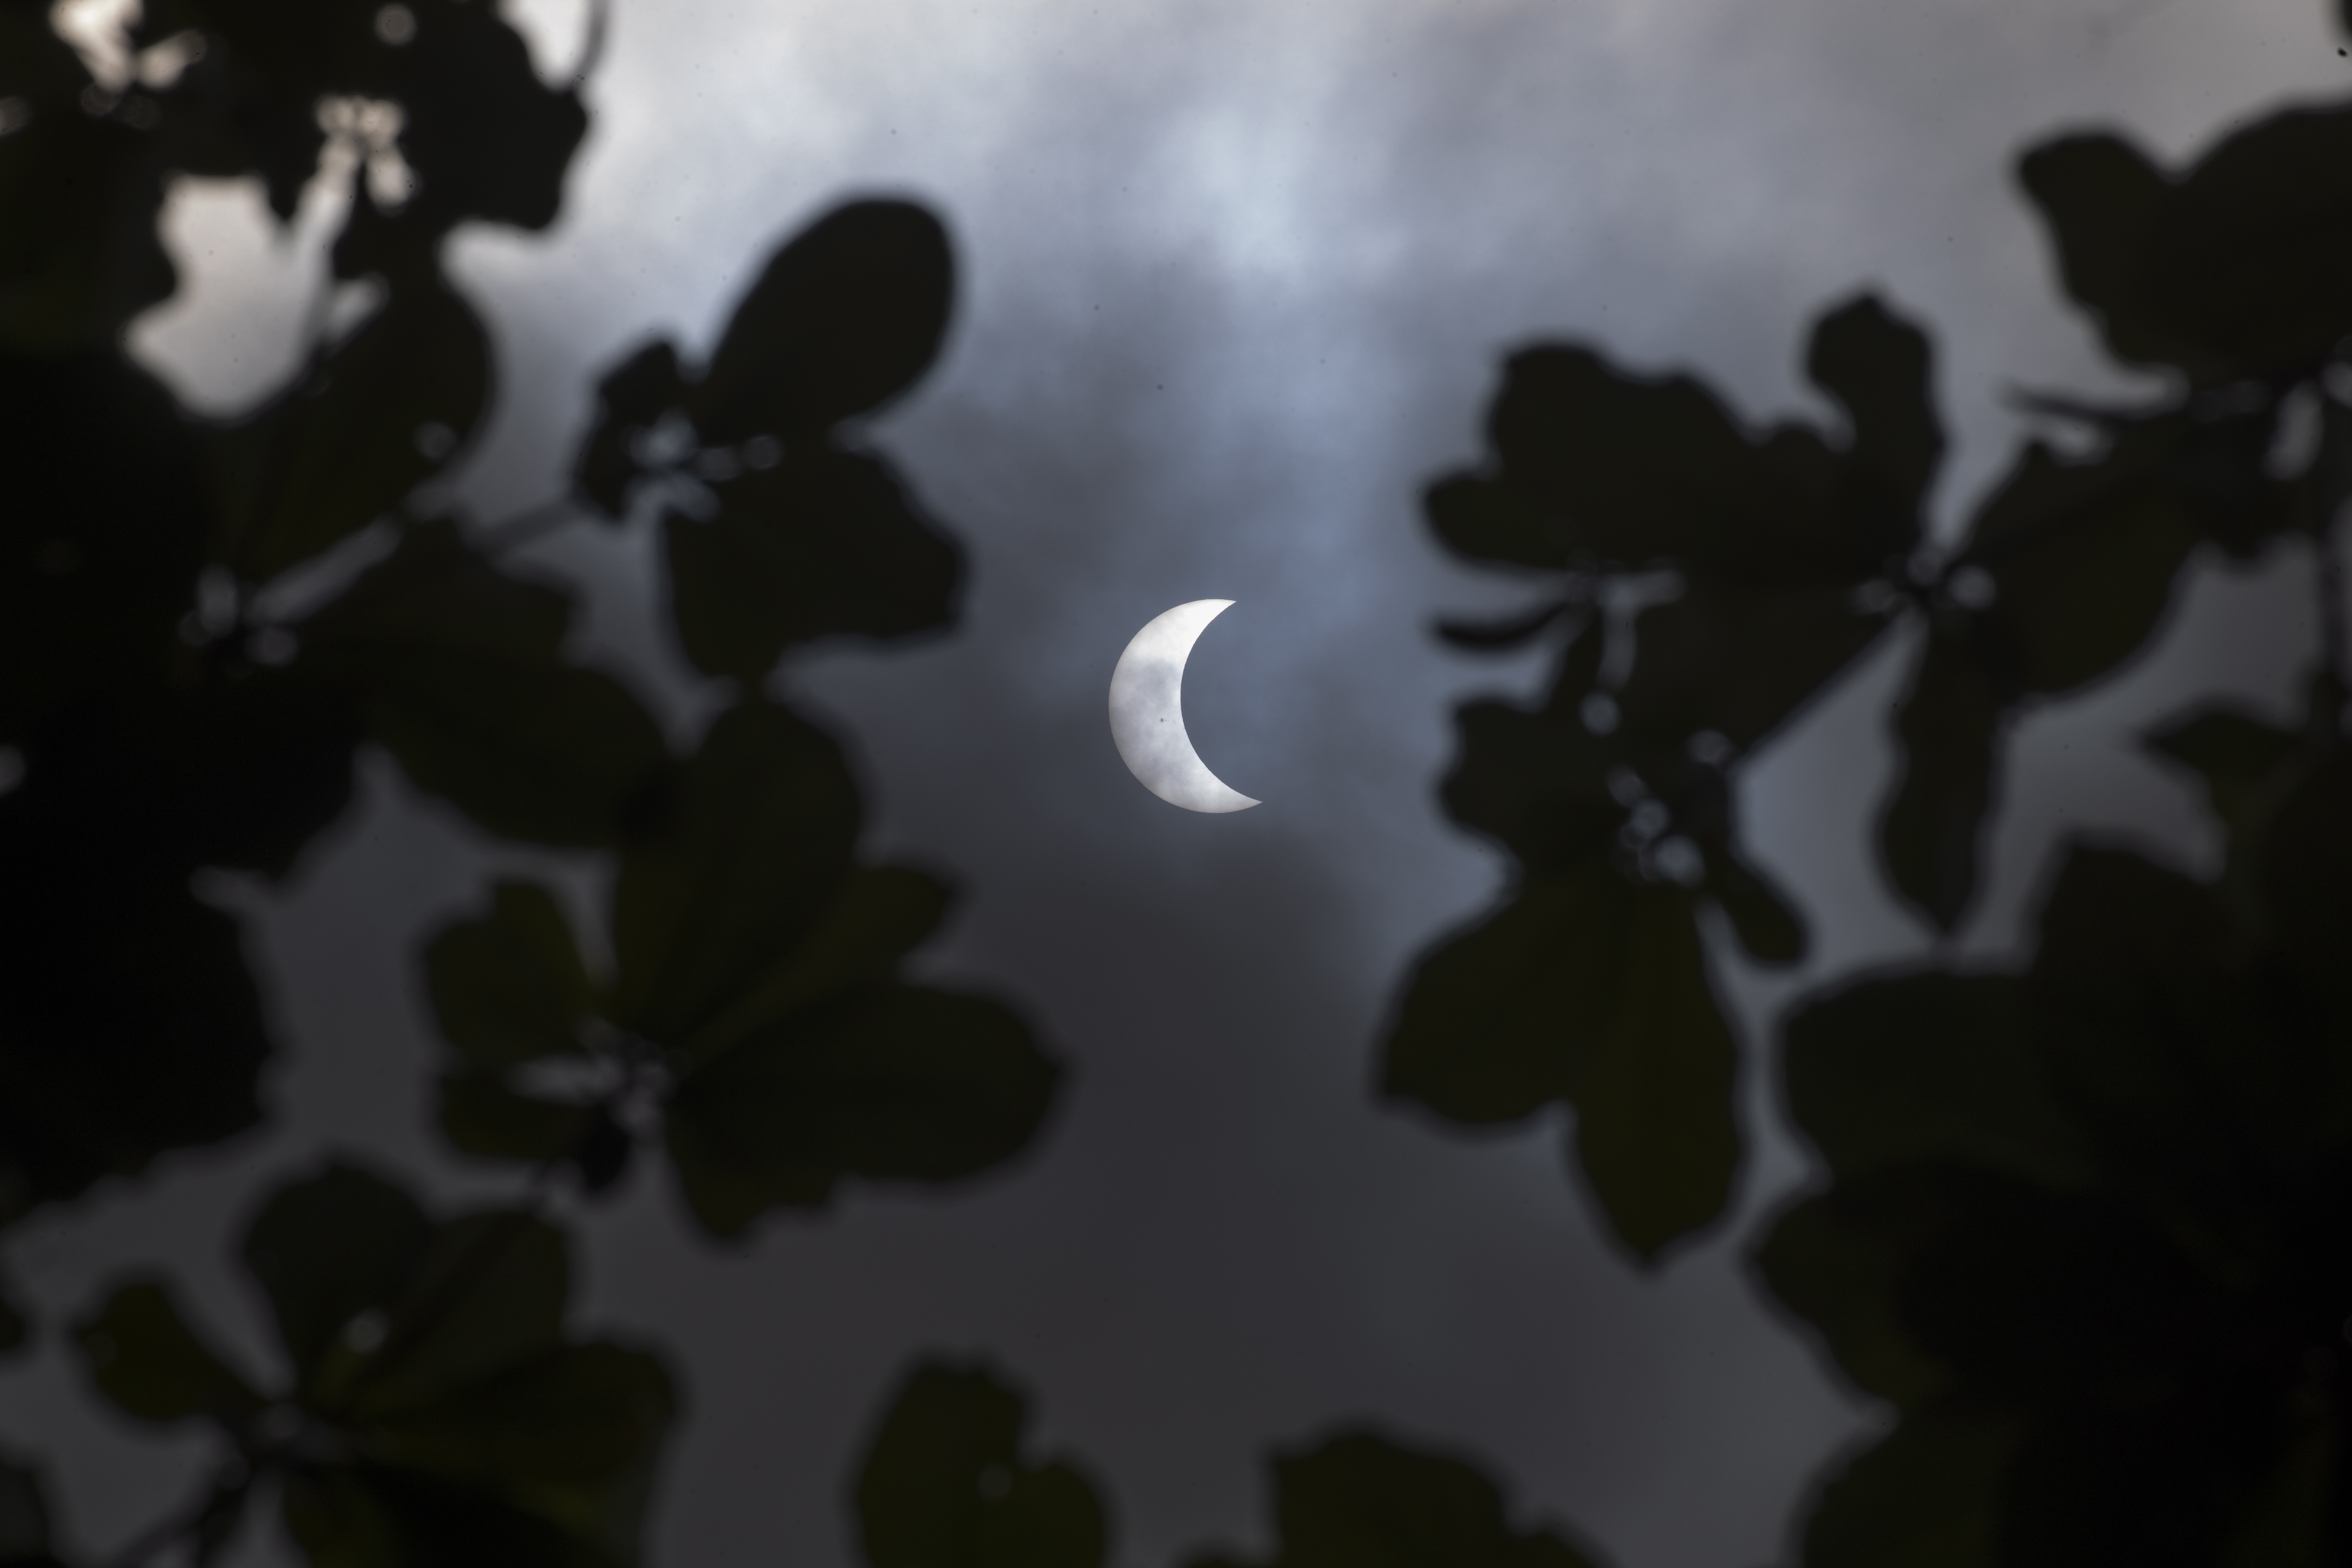 Eclipse parcial en Indonesia